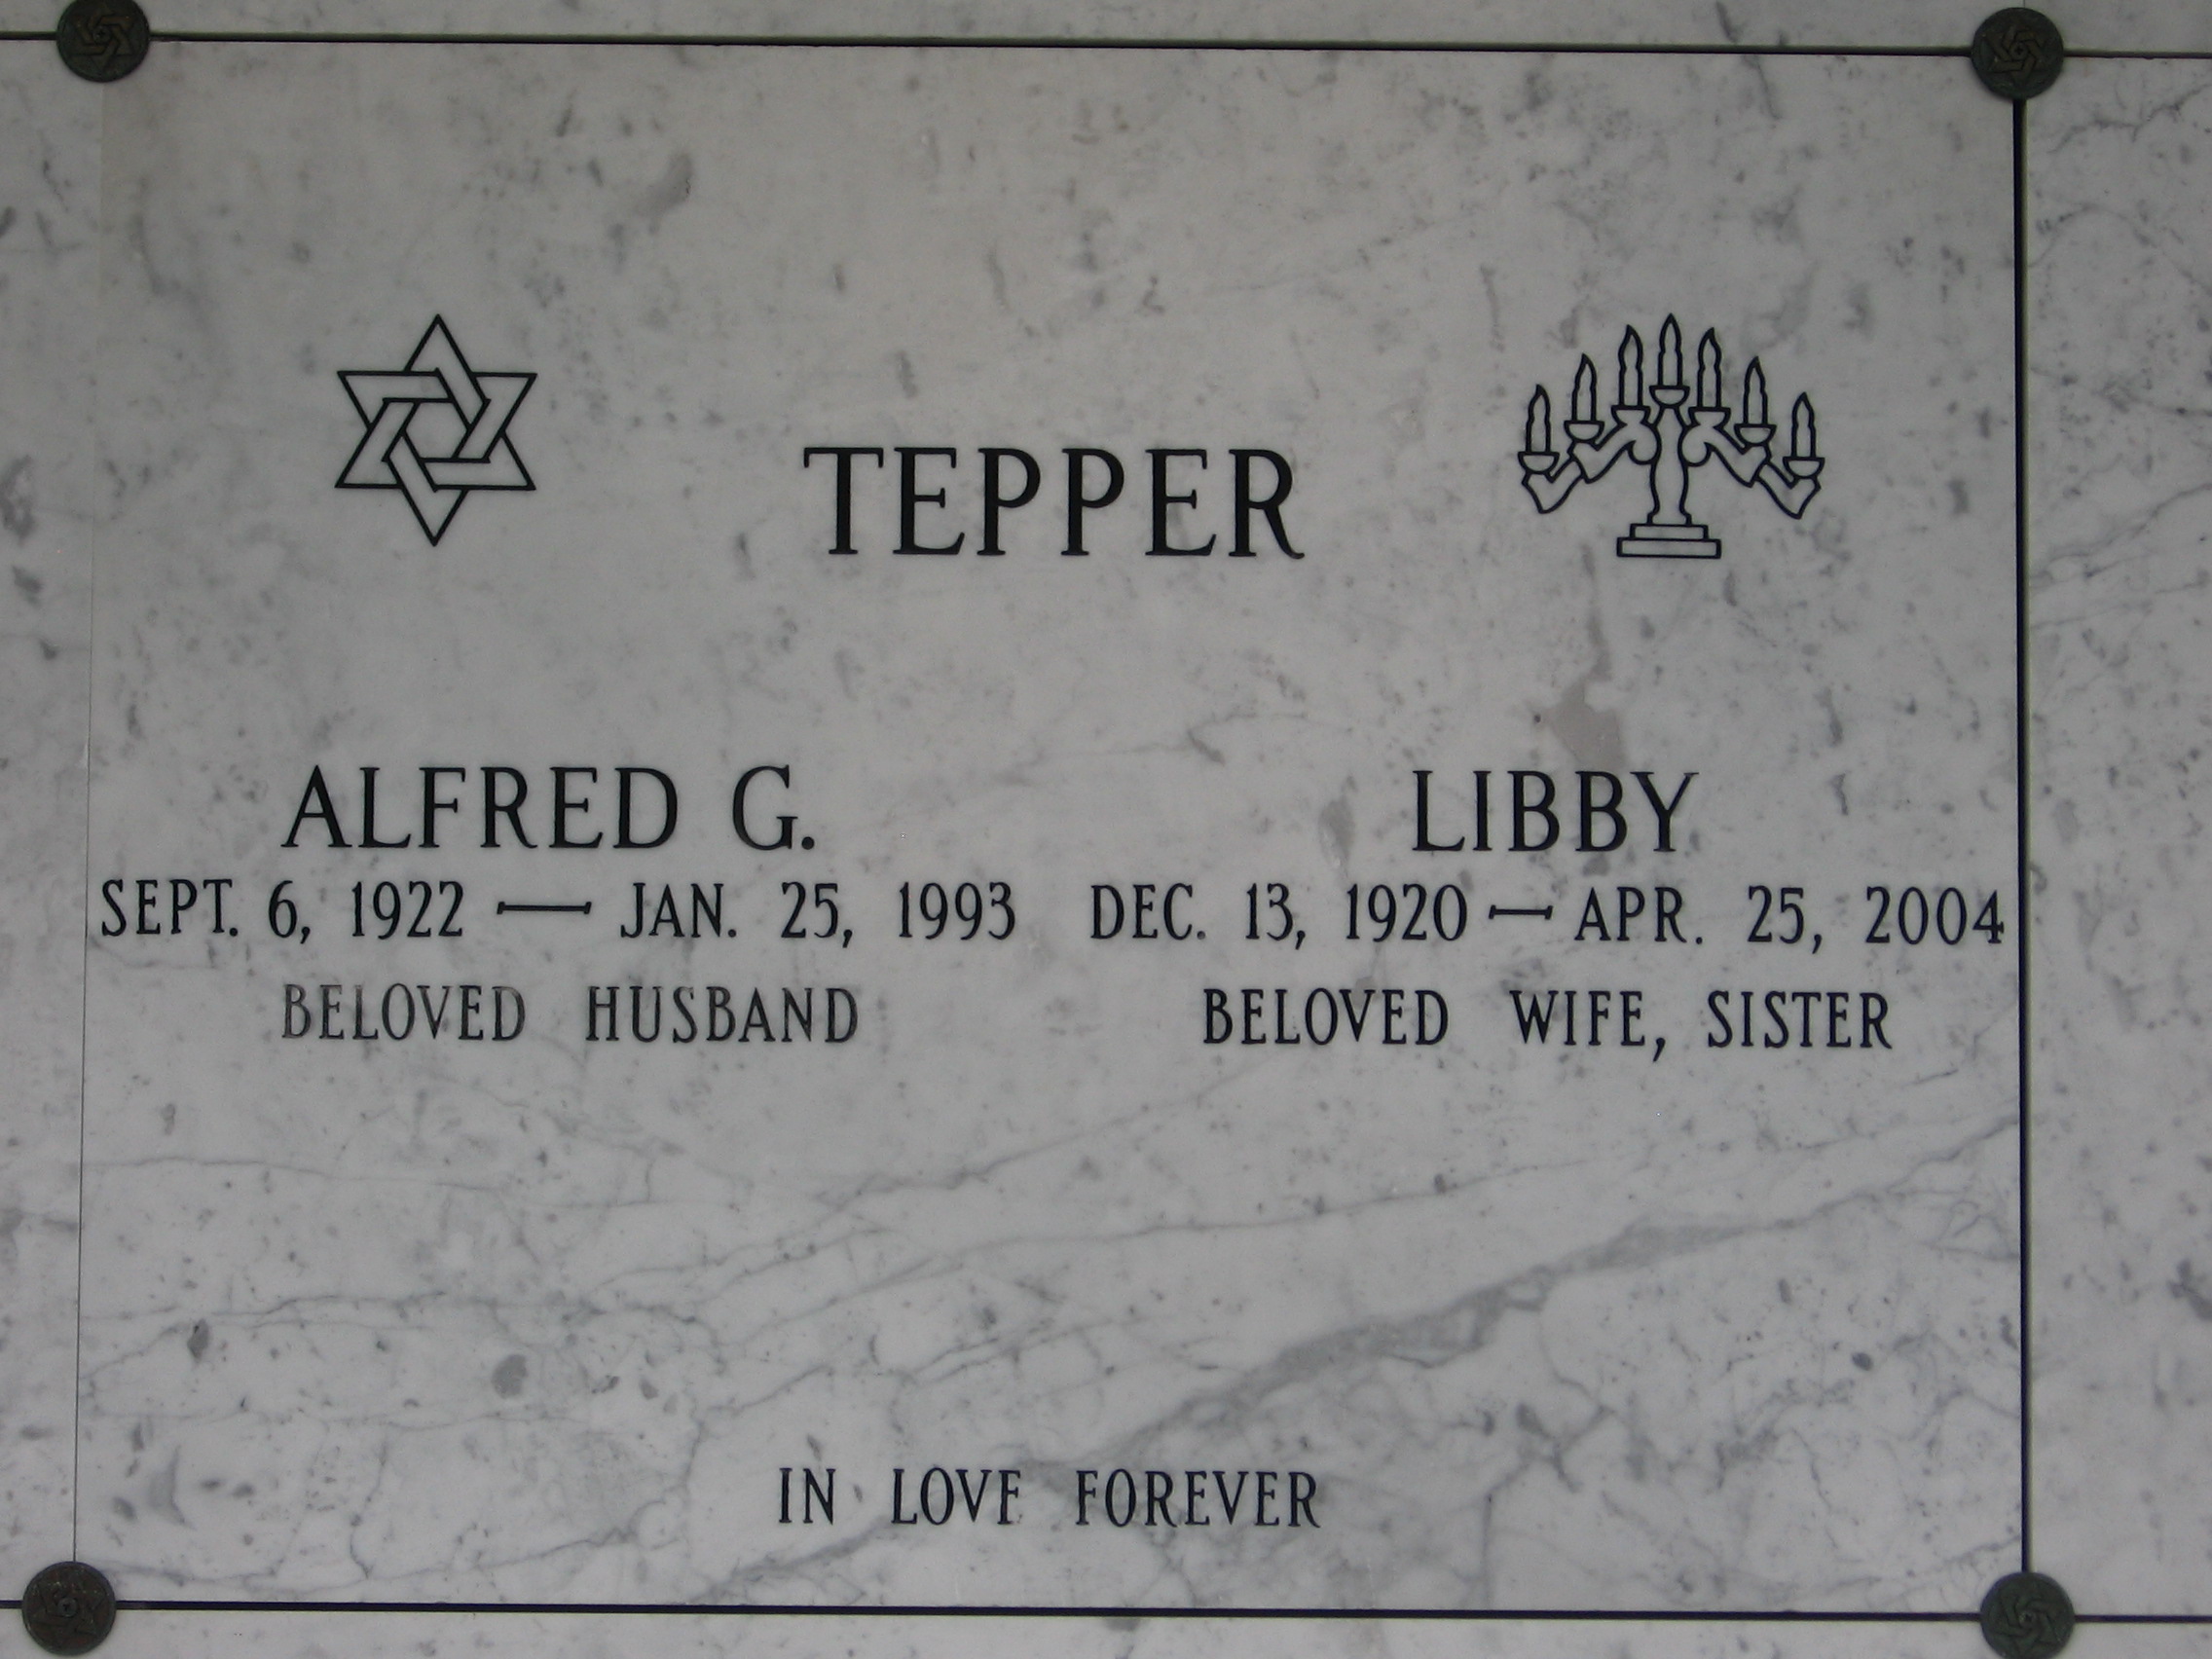 Libby Tepper